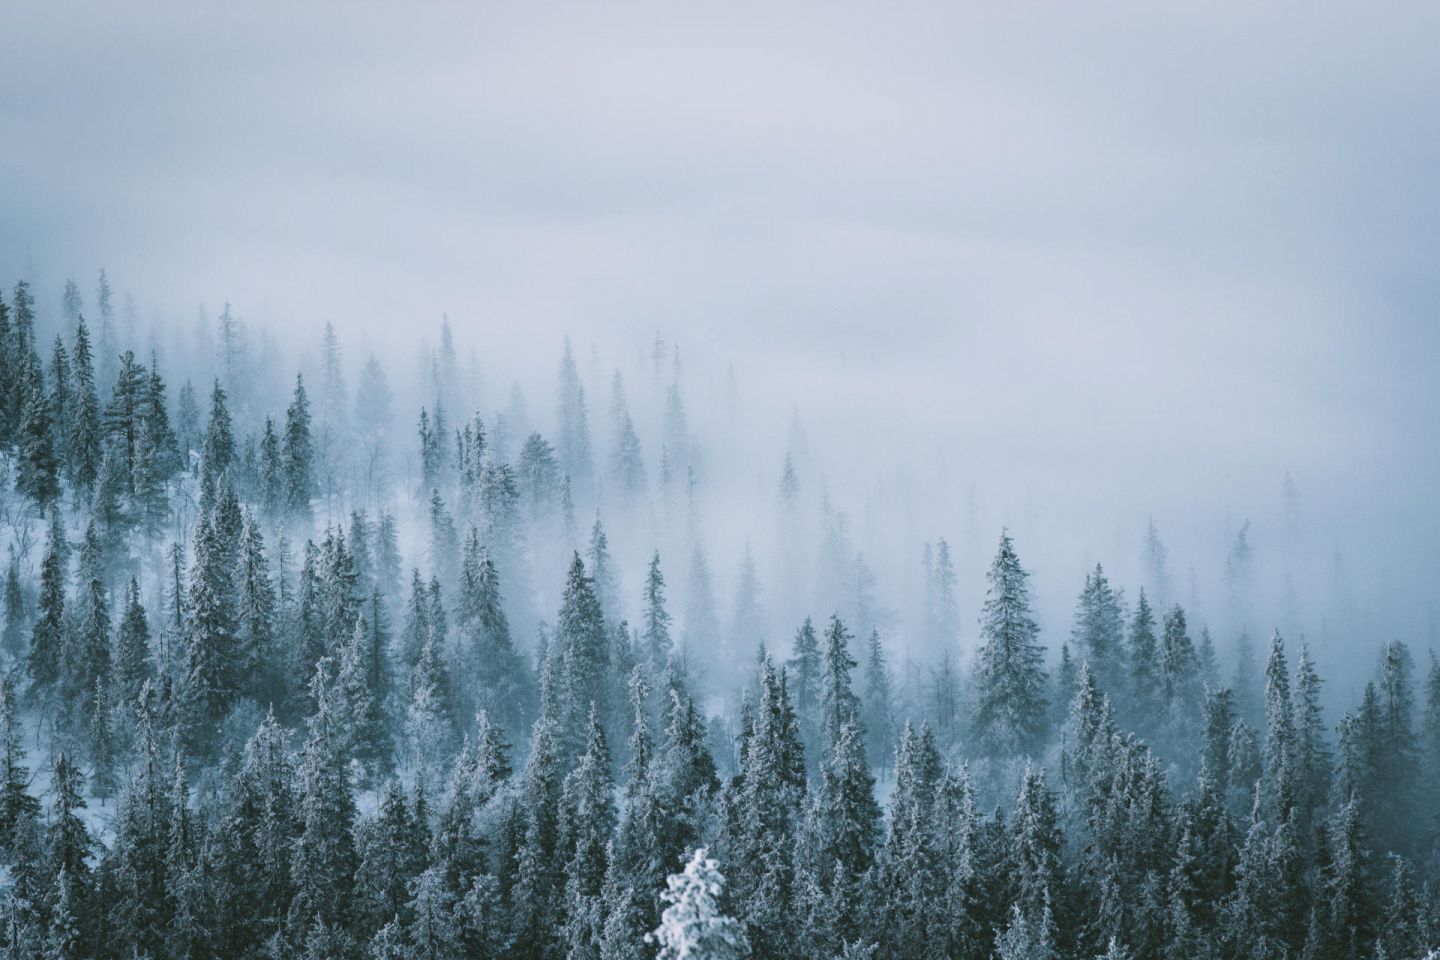 Mist rolls over the pines in Lapland, Europe's last wilderness